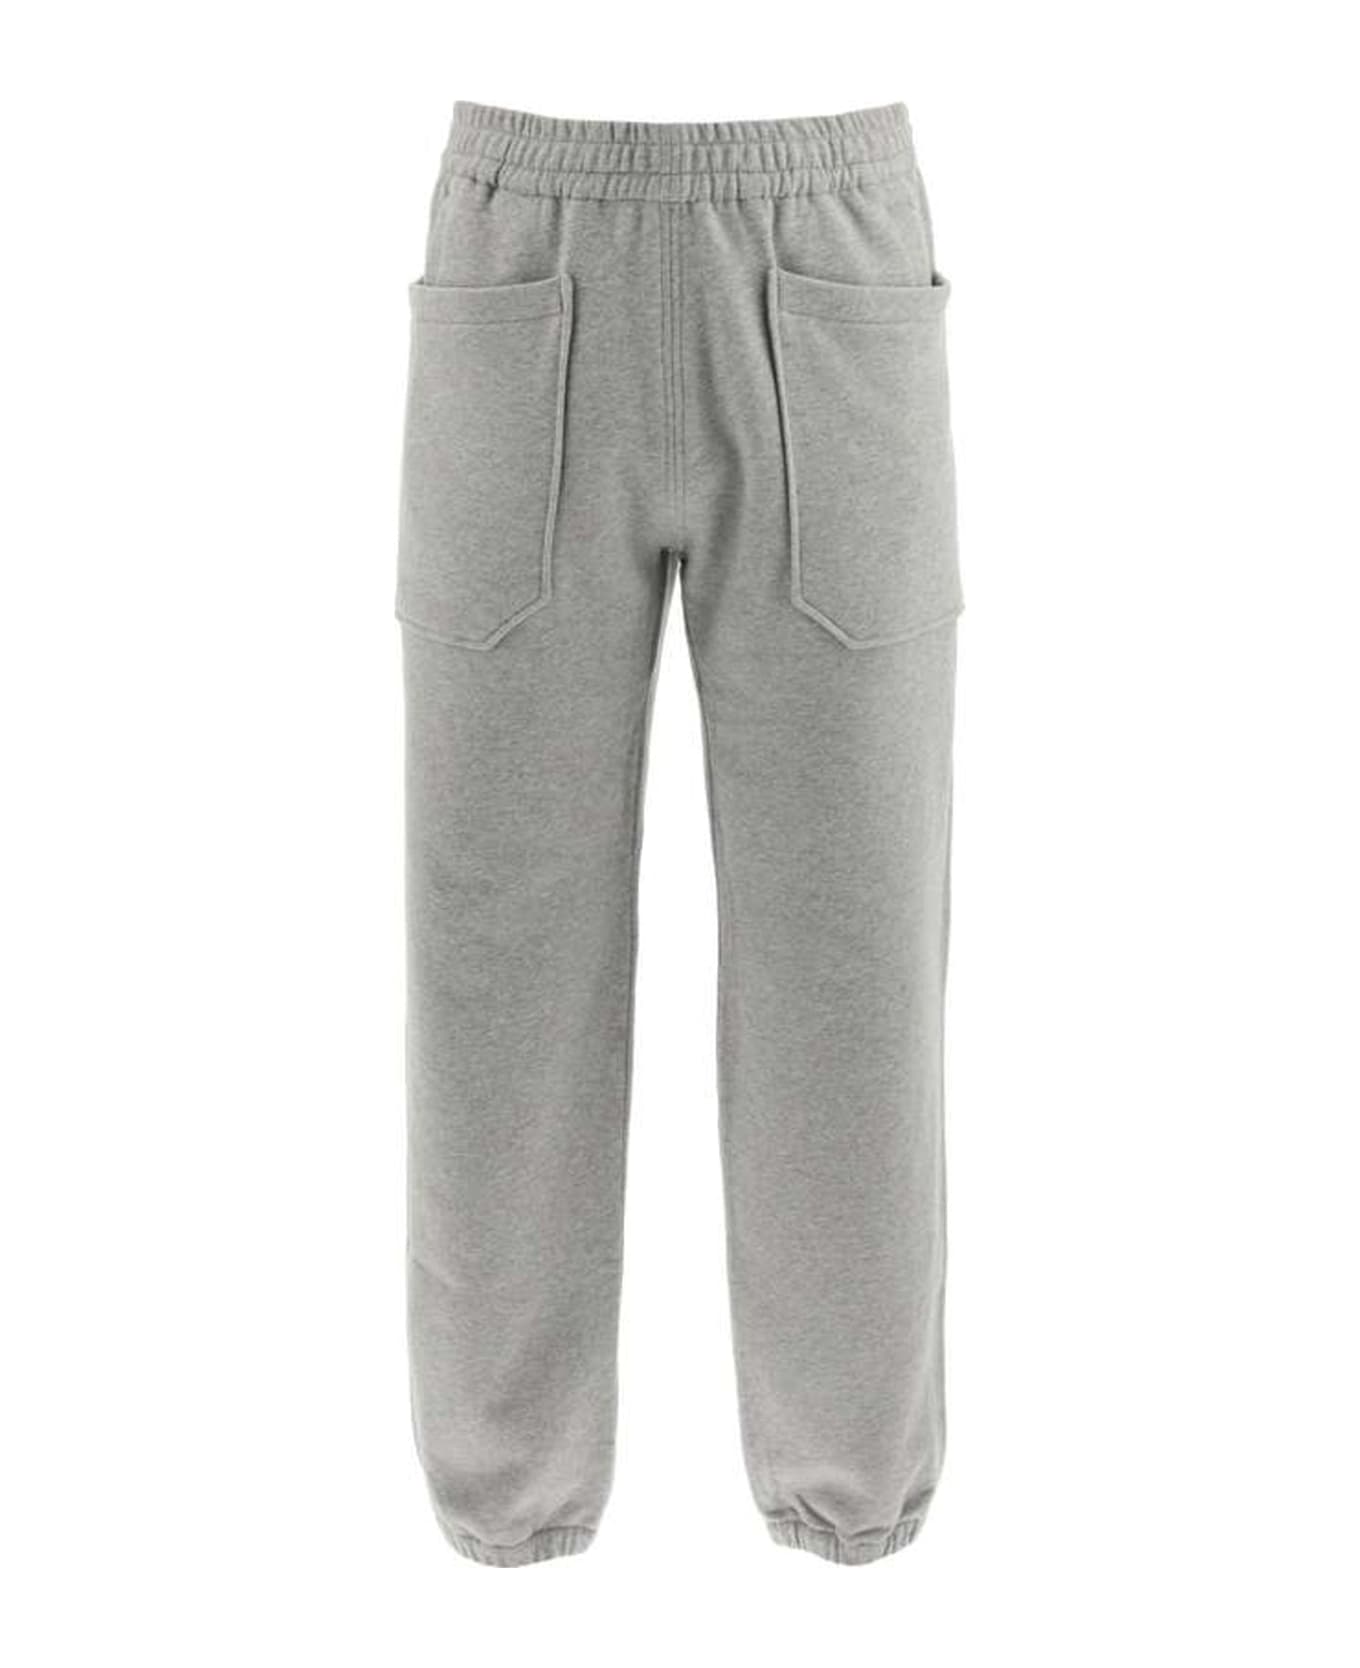 Zegna Cotton Sweatpants - Gray スウェットパンツ